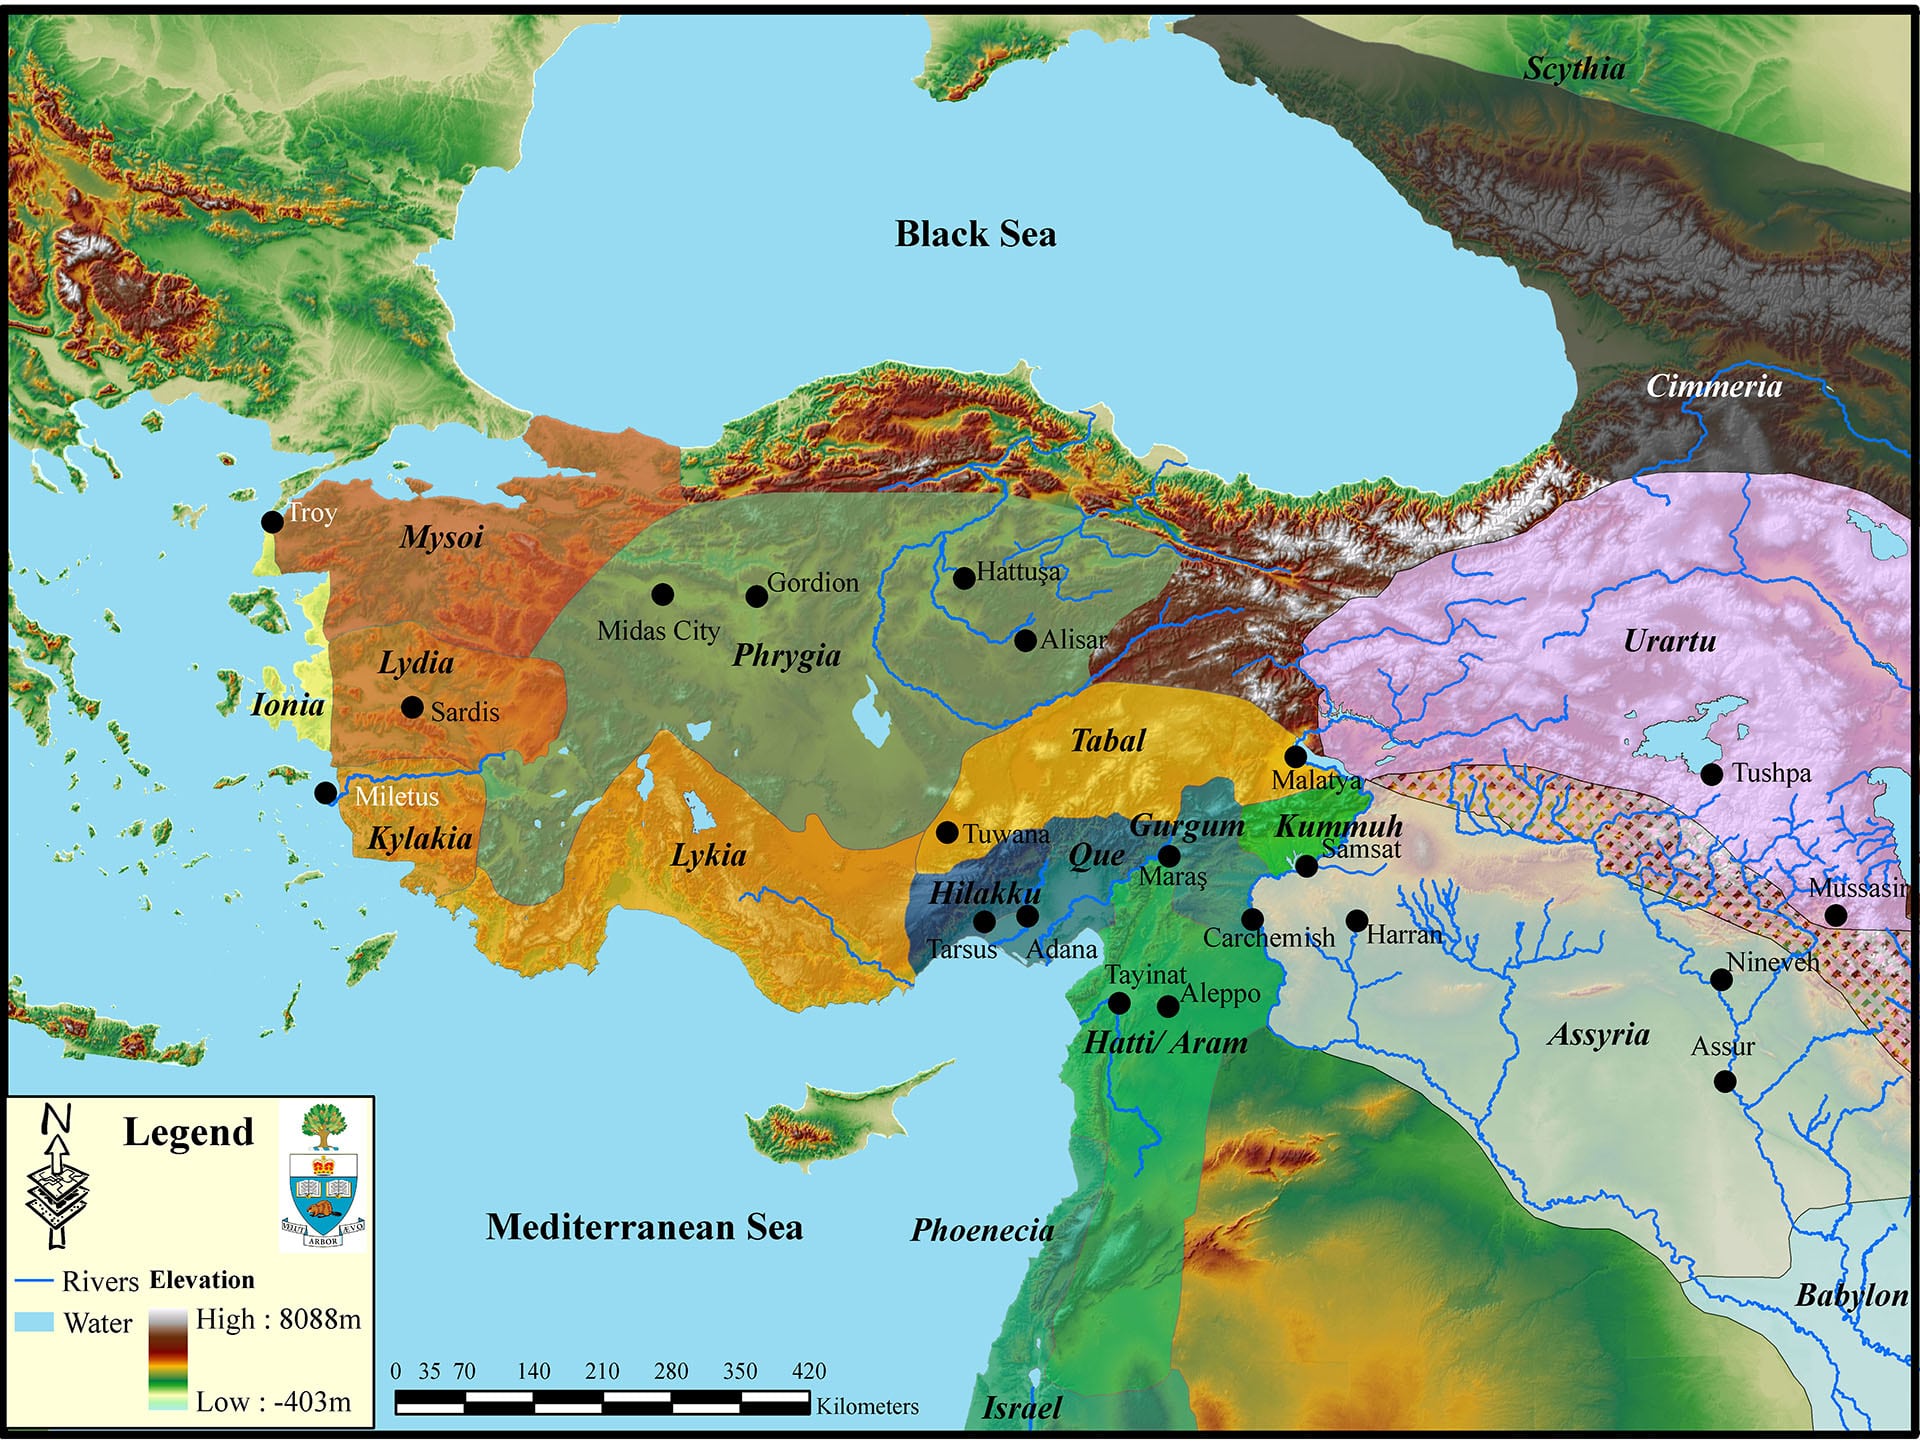 map-iron-age-anatolian-kingdoms-anatolia-mid000009-american